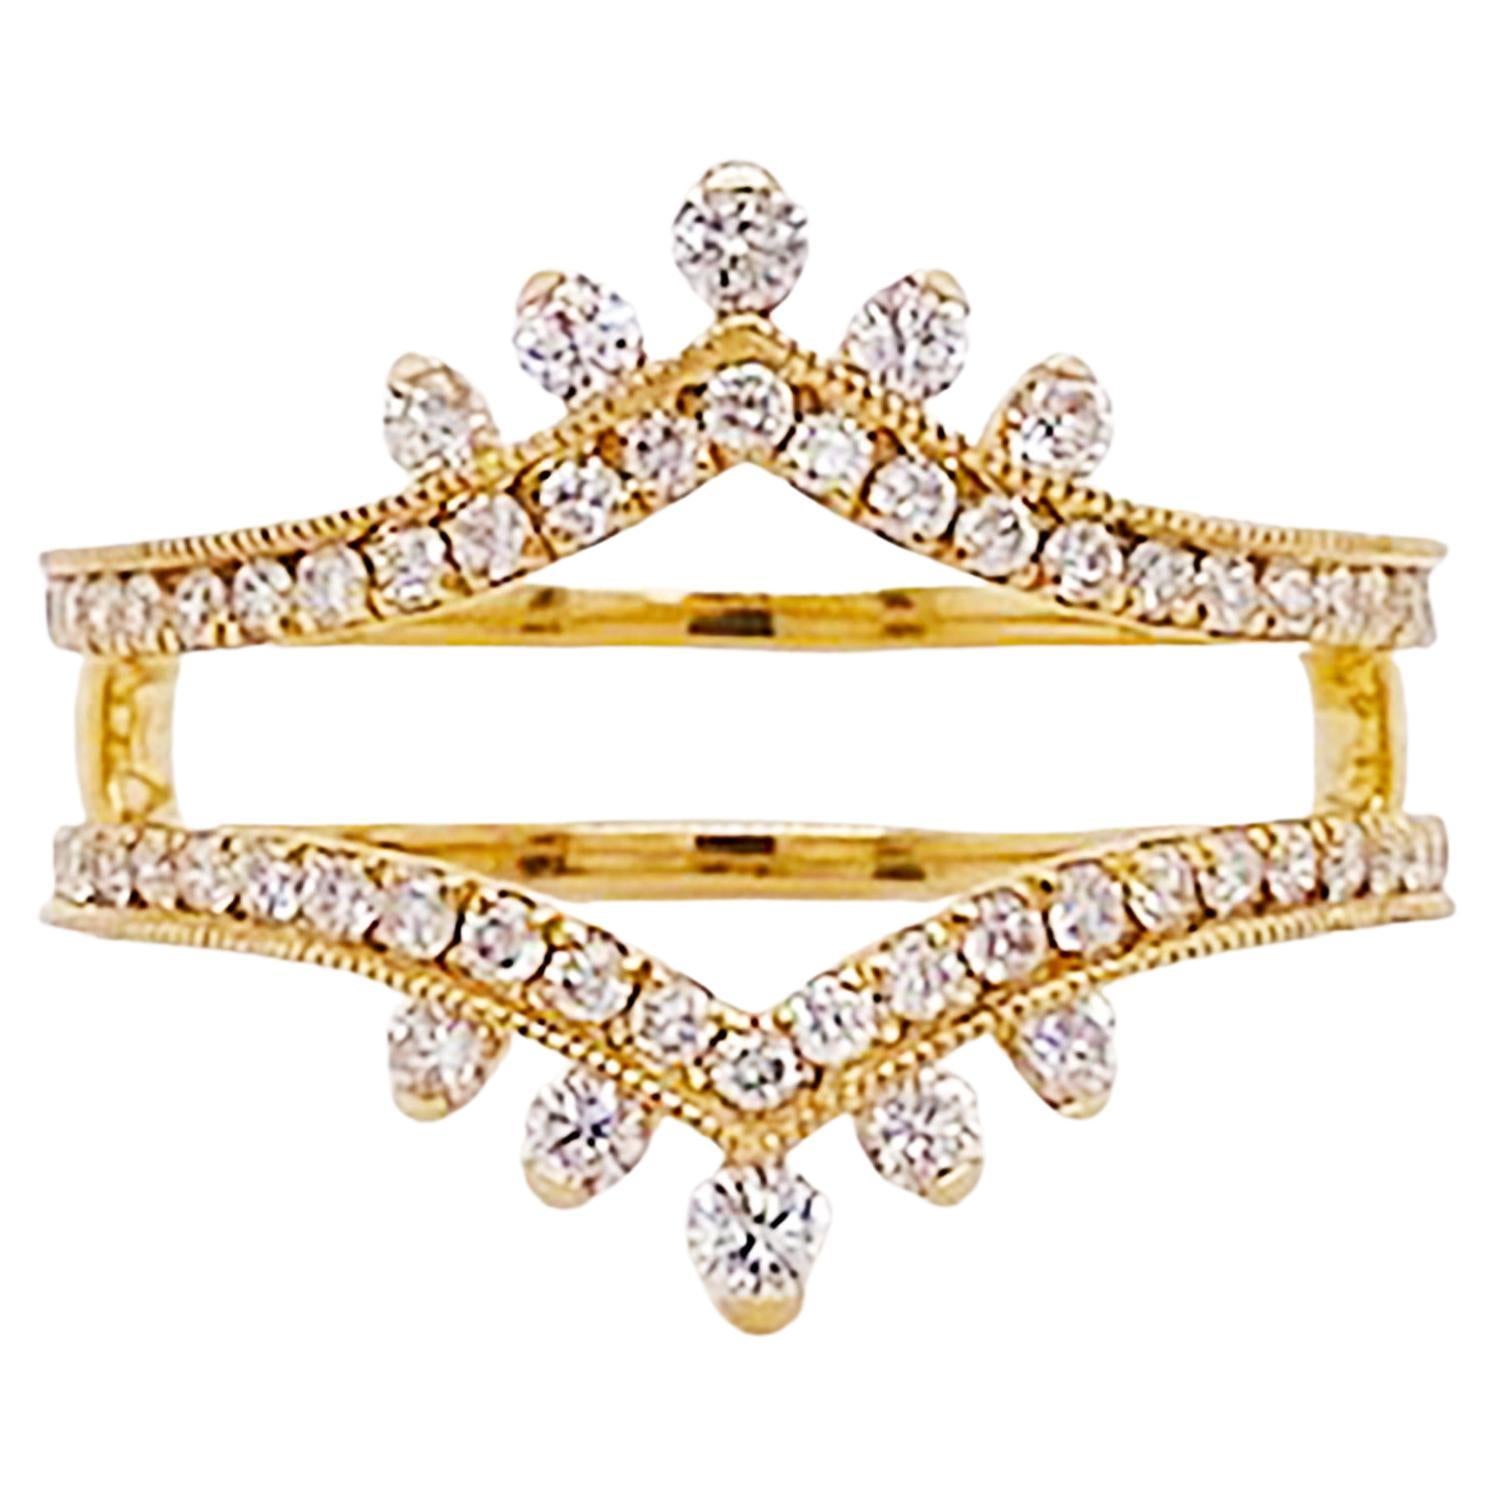 For Sale:  Diamond Crown Ring Enhancer 14K Gold .55 Carat Diamond Ring Guard Wedding Band